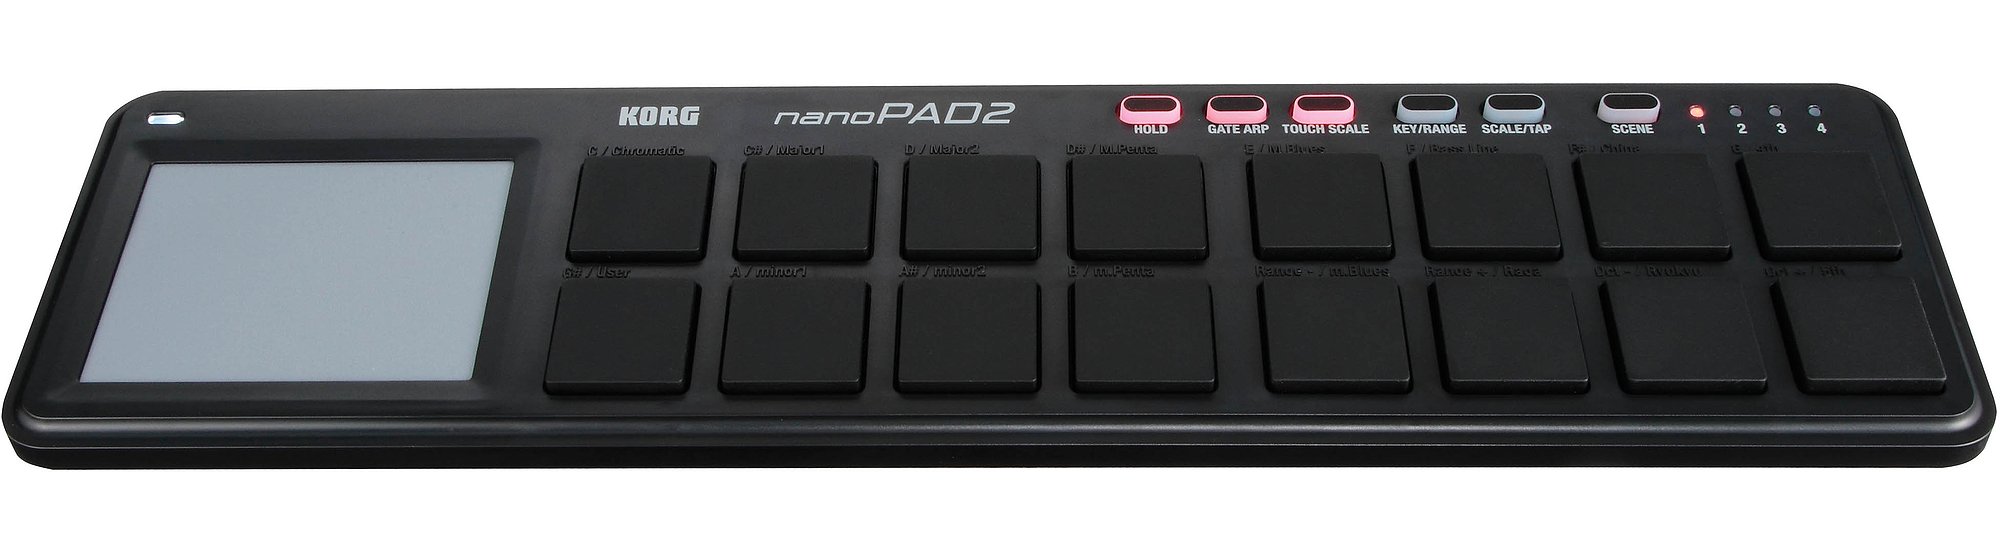 Midi-контроллер-клавиатура Korg NANOPAD 2